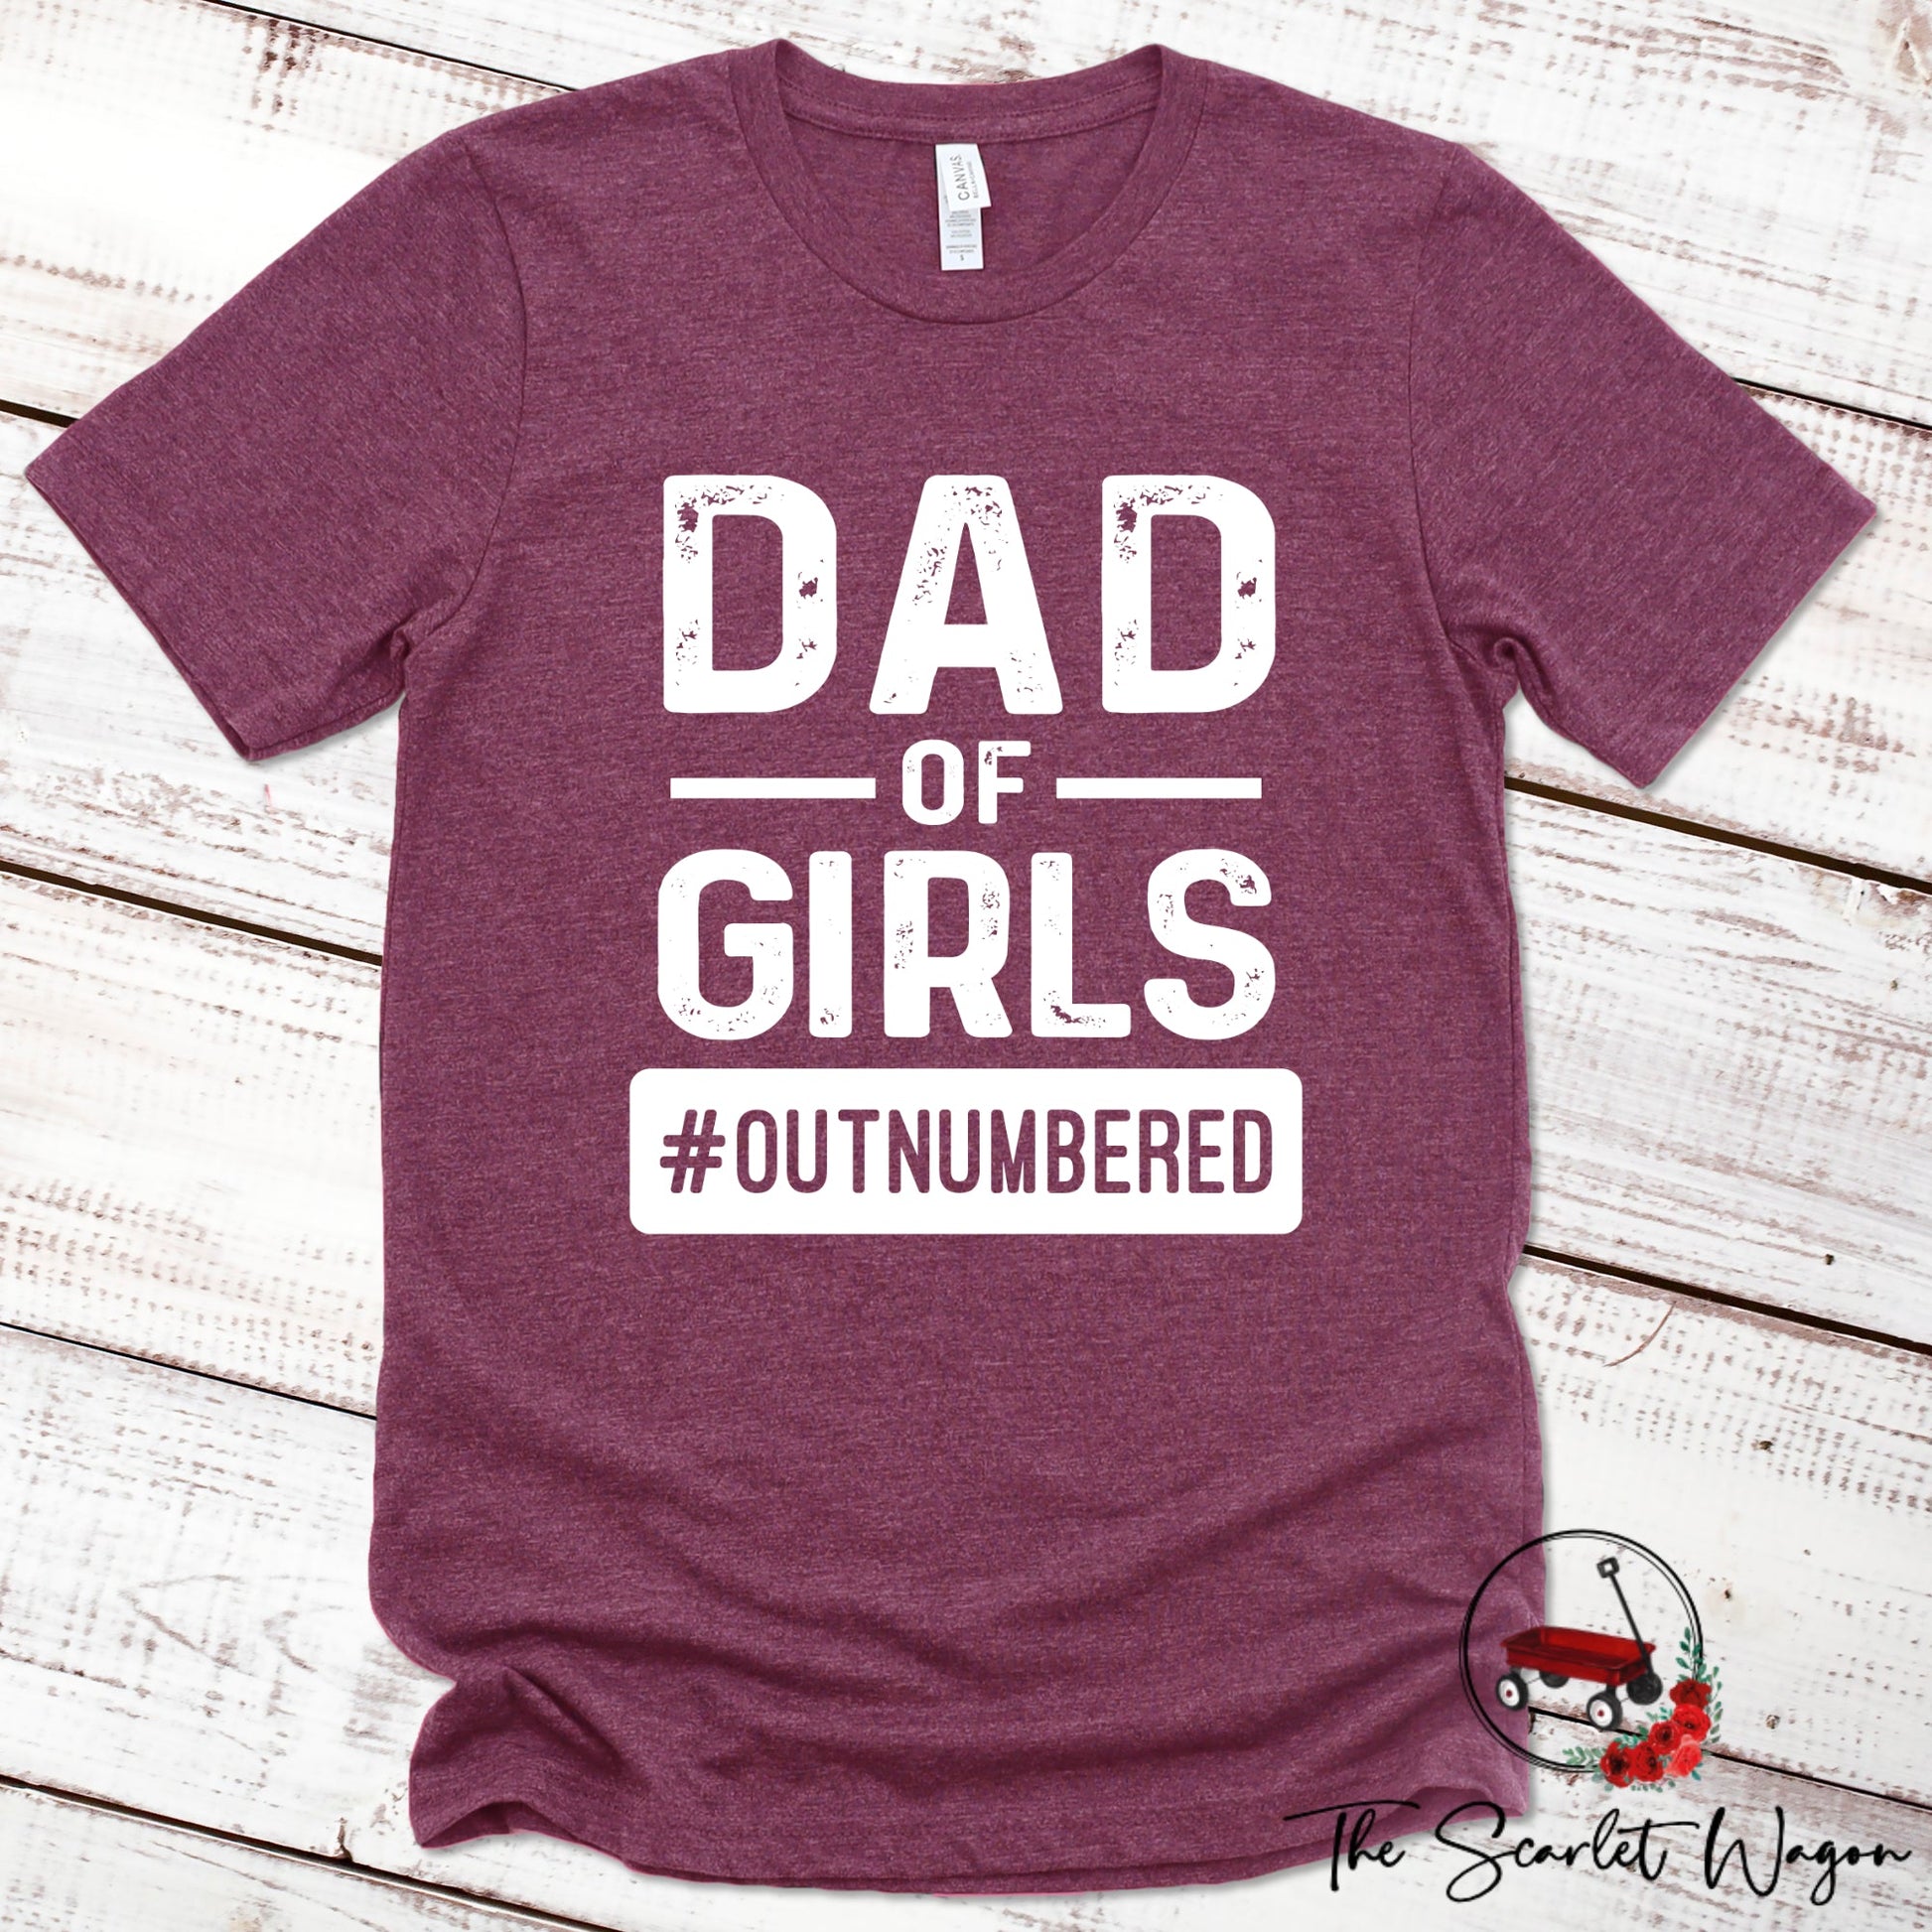 Dad of Girls #Outnumbered Premium Tee Scarlet Wagon Heather Maroon XS 